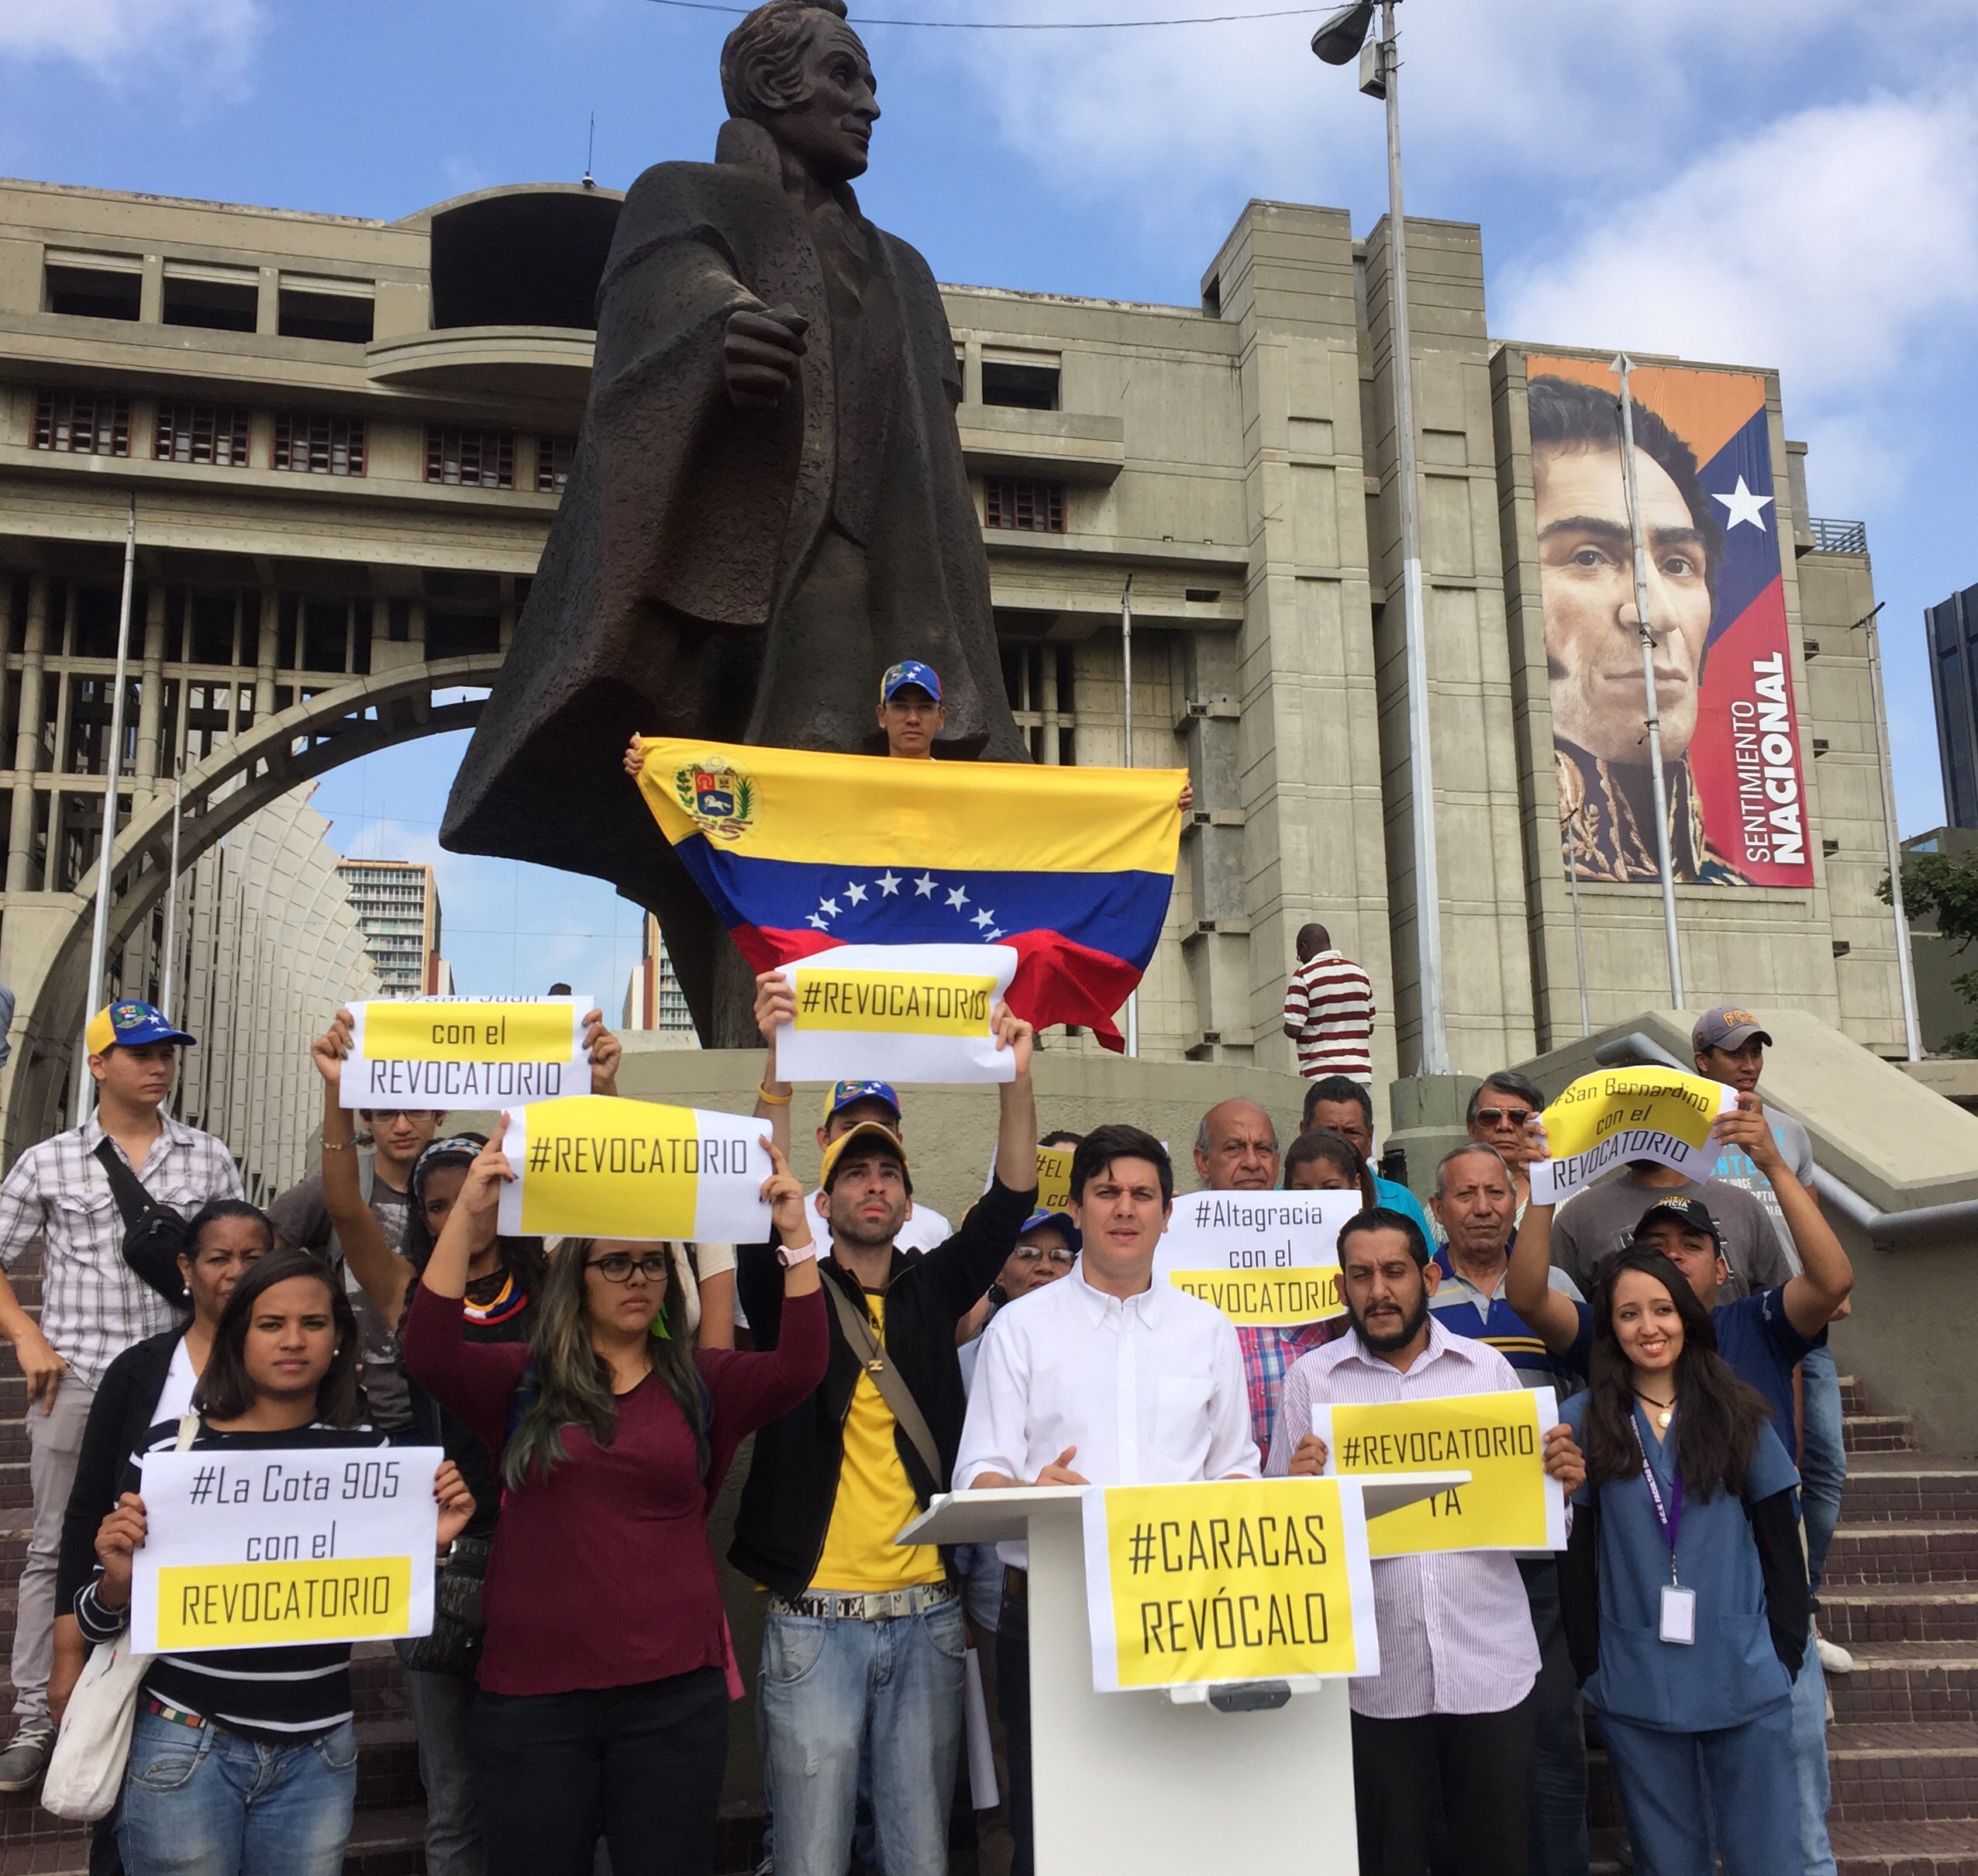 “La meta en Caracas es recoger 350 mil firmas para revocar a Maduro”